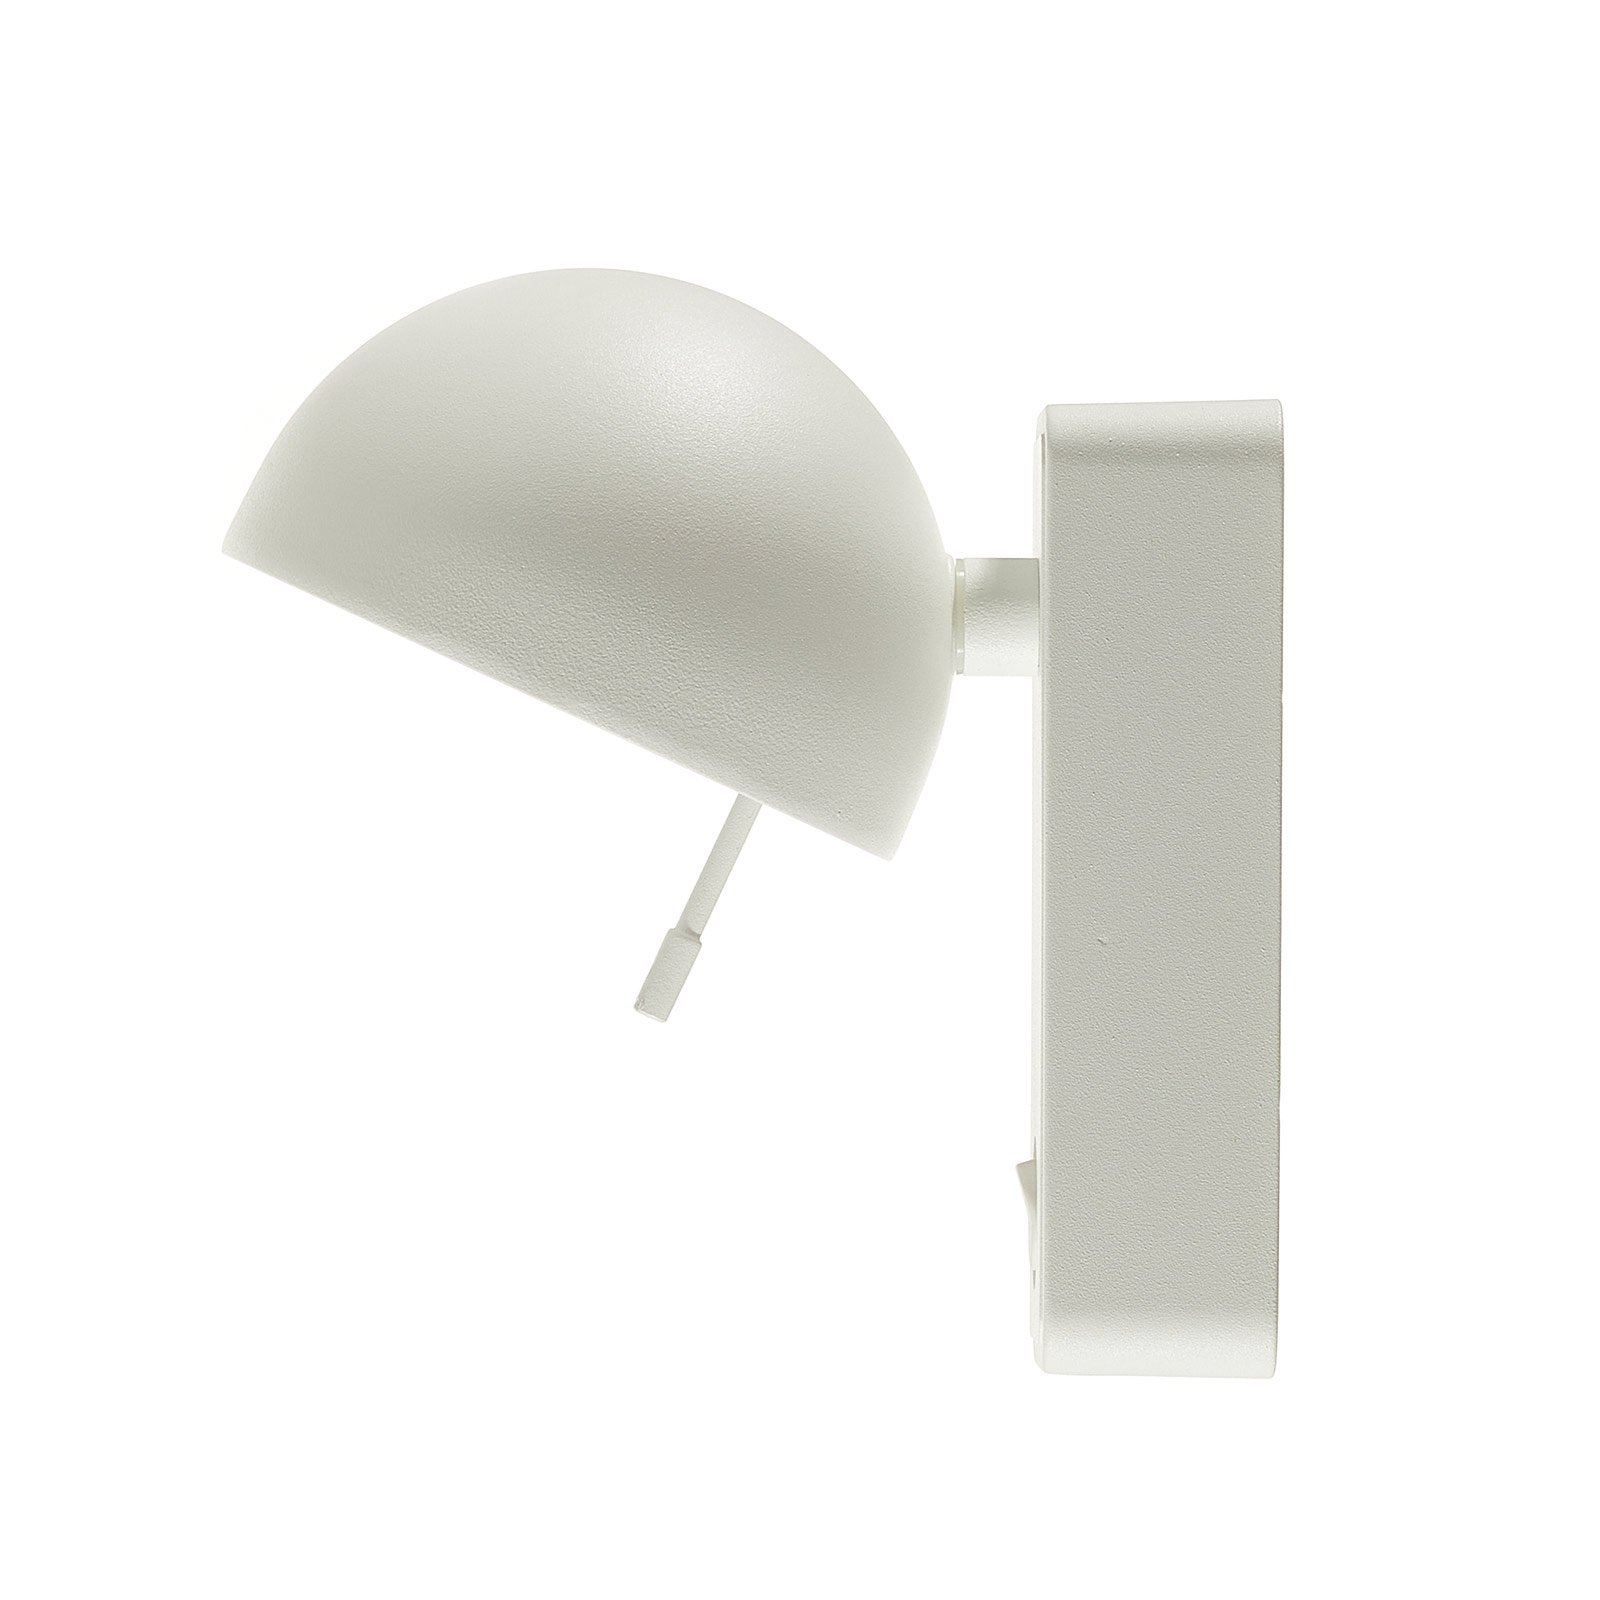 Bover Beddy A/01 LED nástěnné otočné bílá/bílá